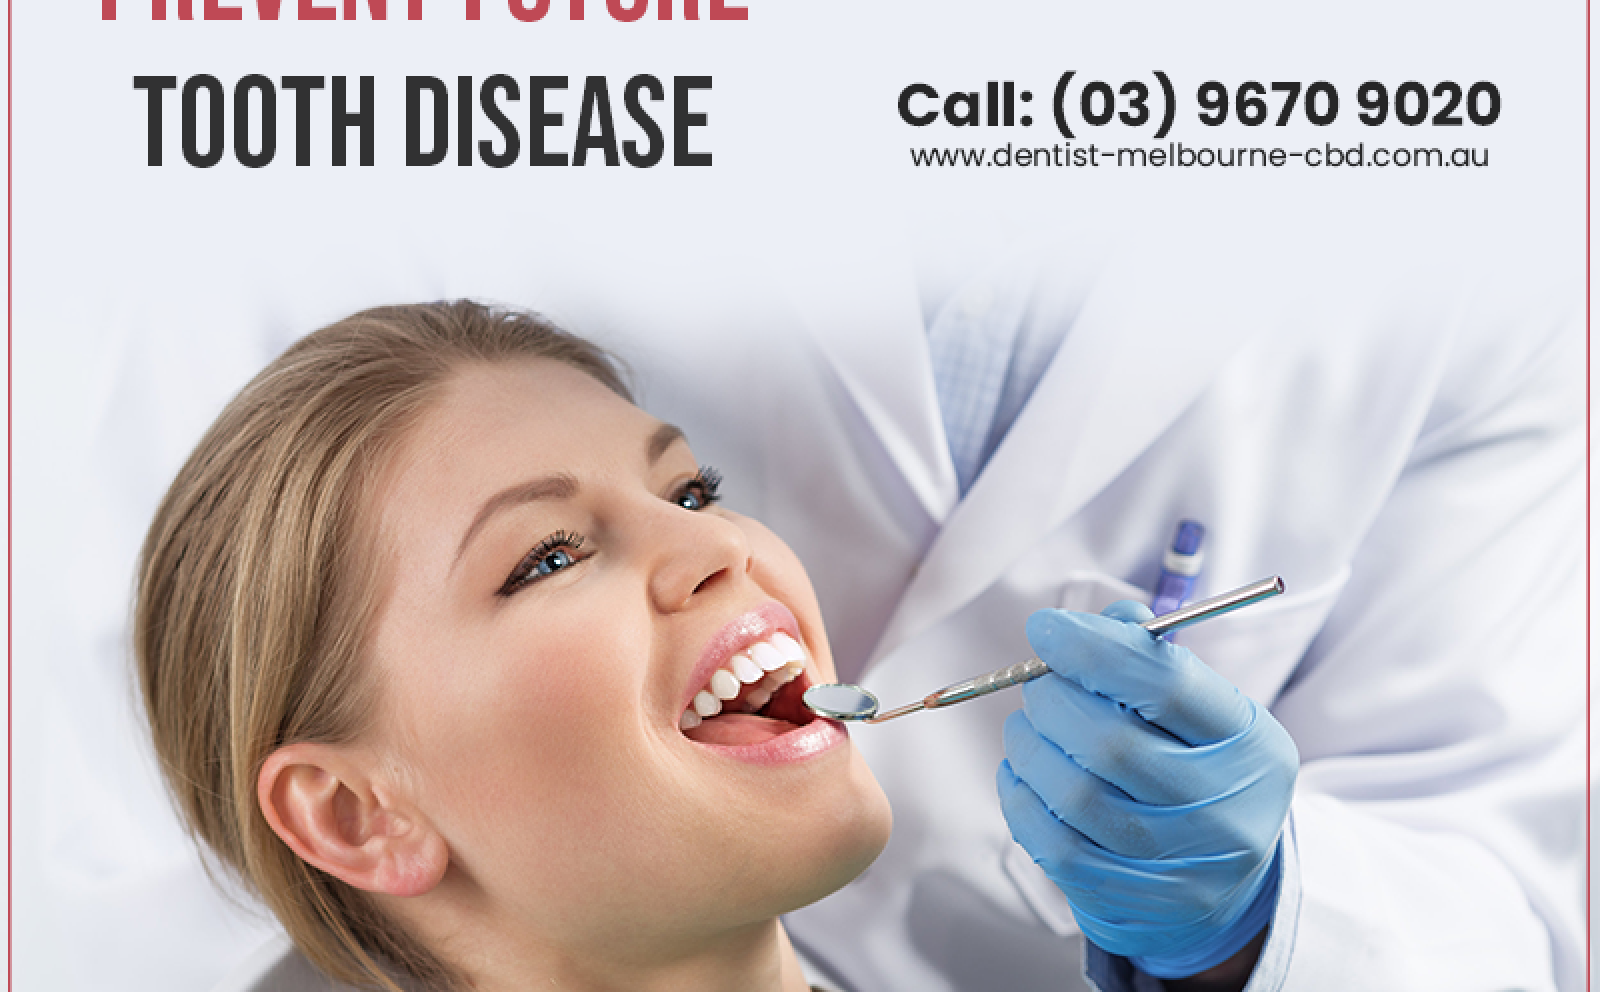 Dentist Melbourne CBD – Dr Zamani Dental Practice